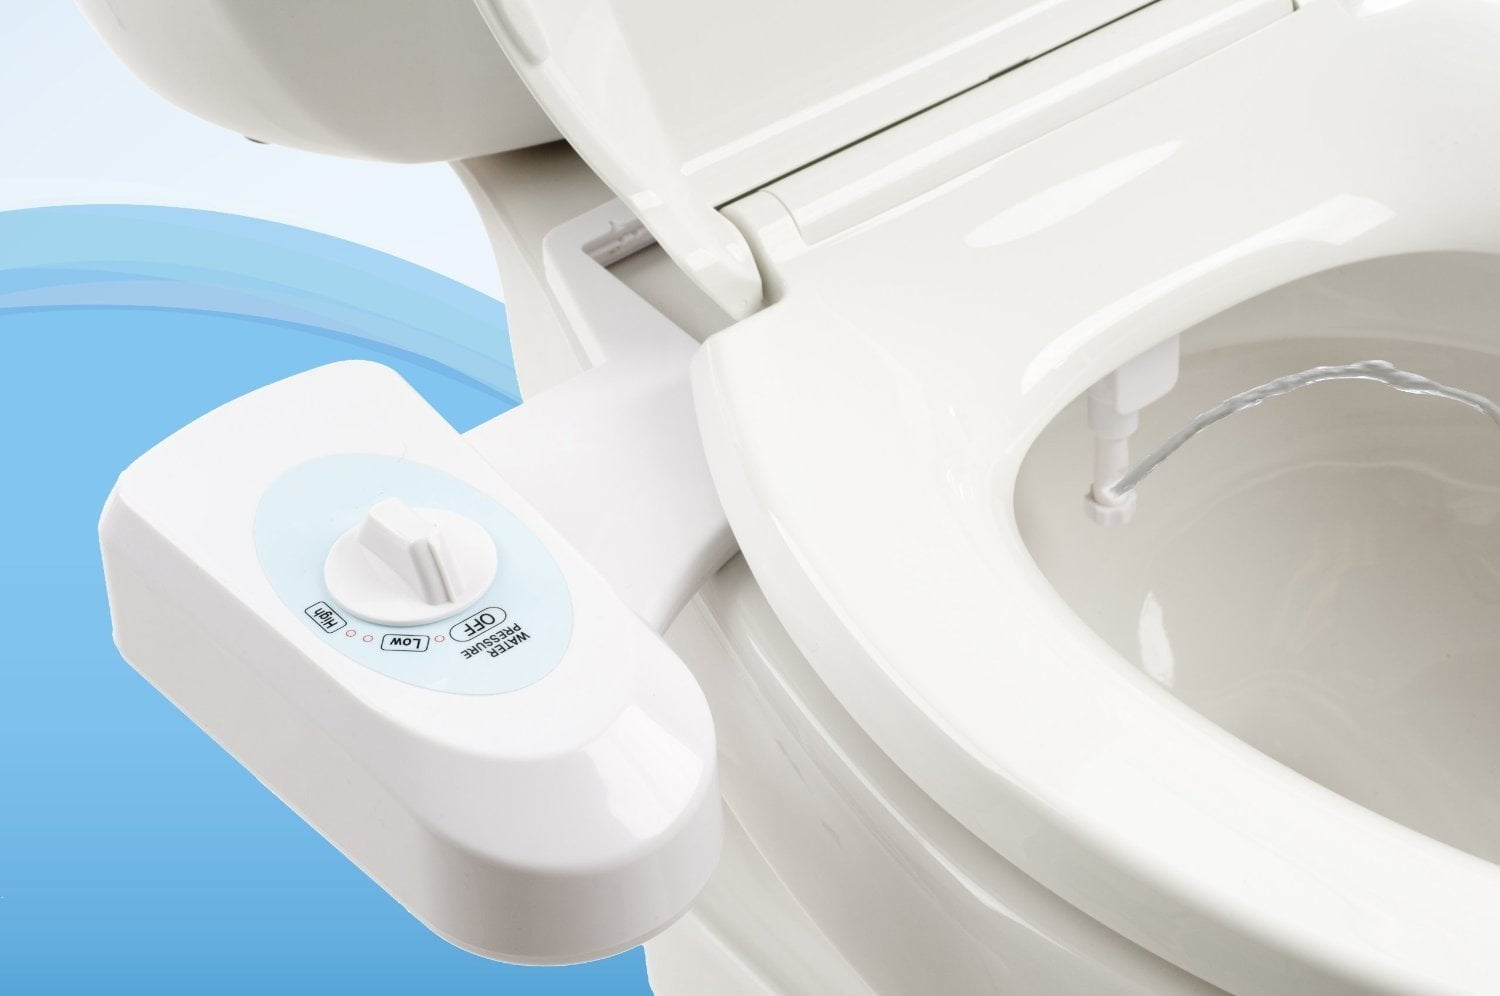 Water Non Electric Simple Toilet Seat Bidet Sprayer Nozzle Toilet Seat L5A4 